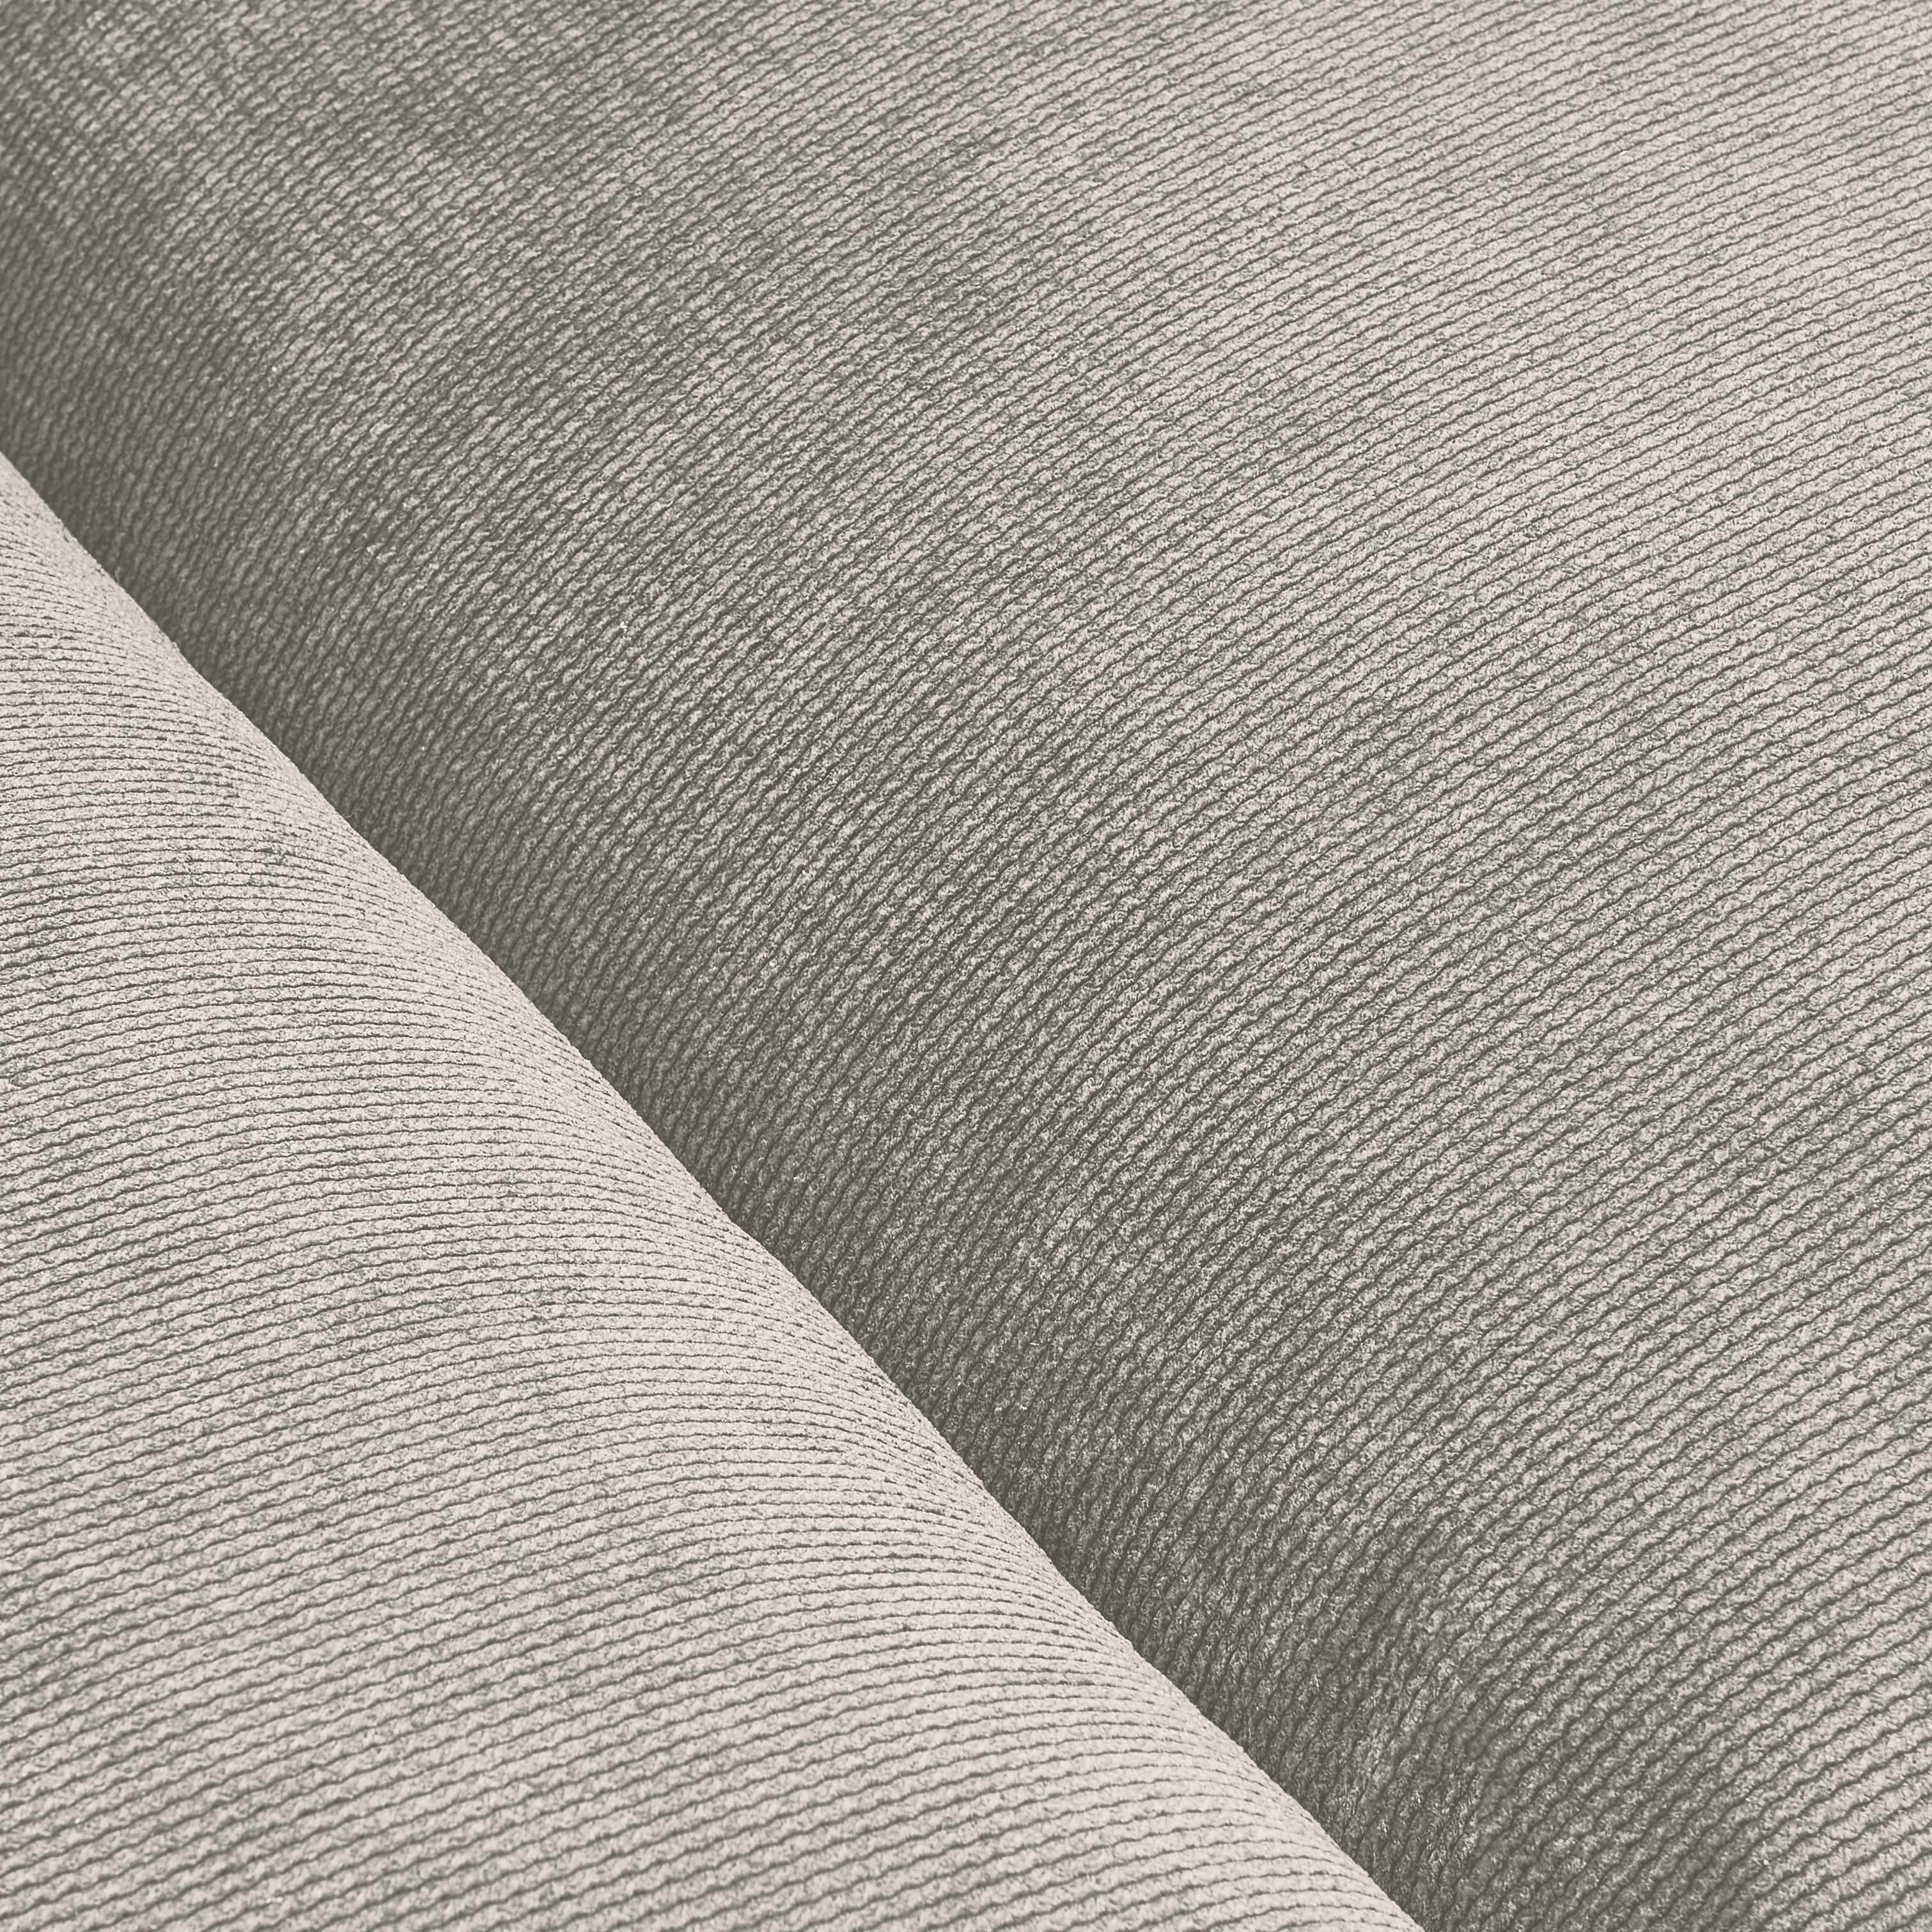 BIGSOFA Kord Grau  - Schwarz/Grau, Design, Kunststoff/Textil (260/90/140cm) - Carryhome